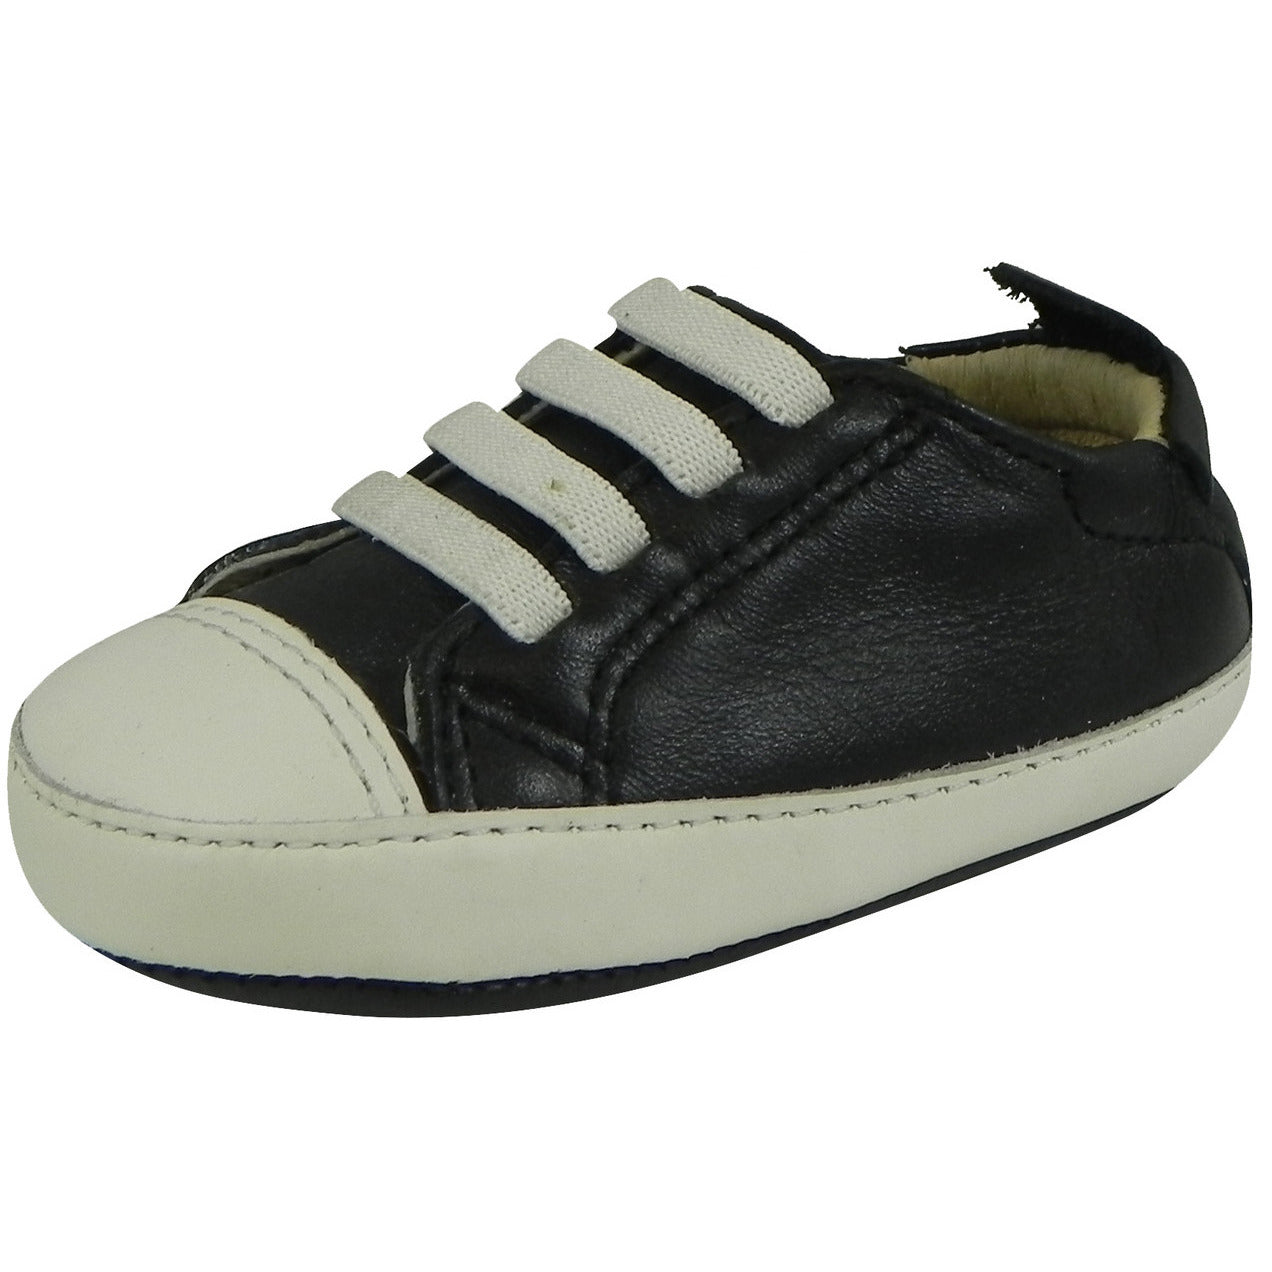 Old Soles Boy's & Girl's 030 Black & White Eazy Tread Sneaker Shoe ...